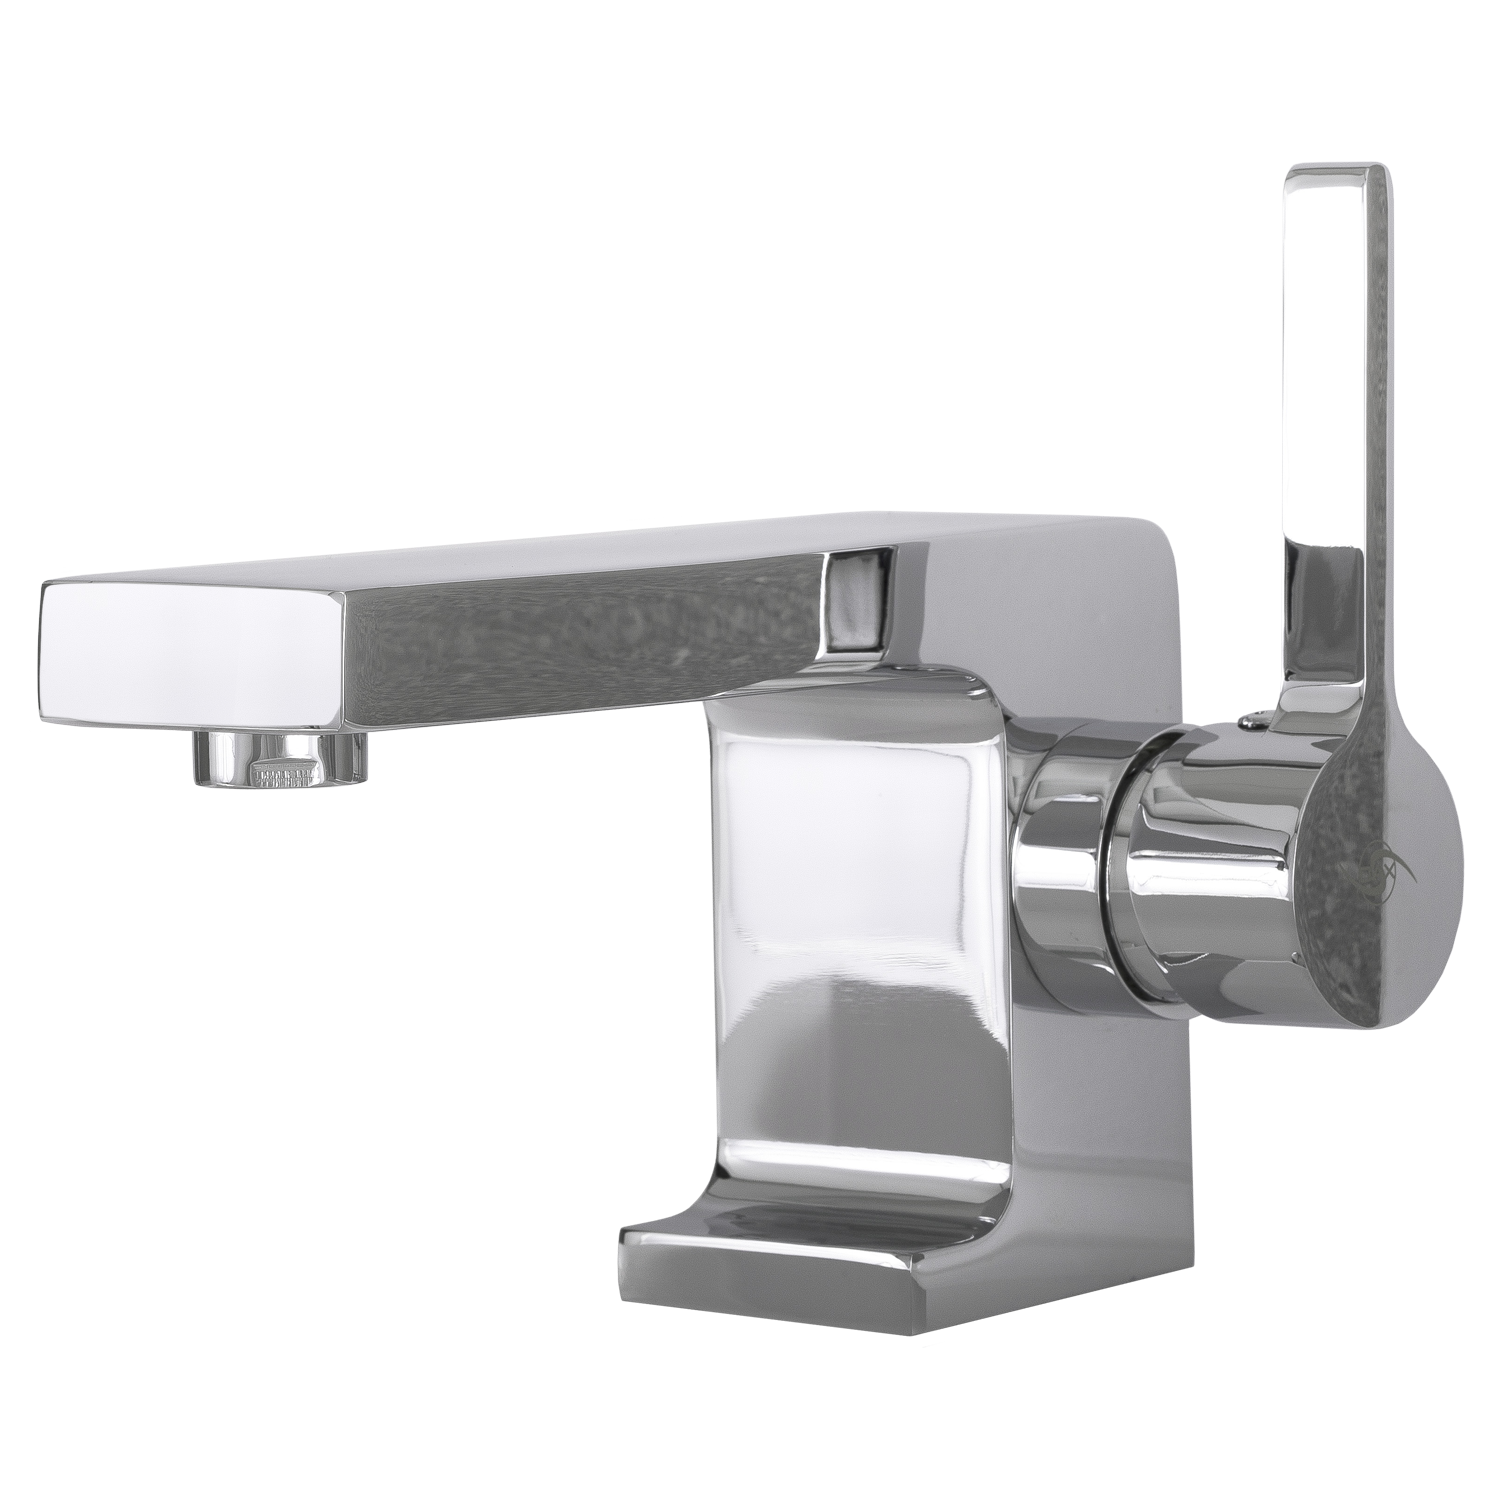 DAX Single Handle Bathroom Faucet, Brass Body, Chrome Finish, 4-1/8 x 6-5/8 Inches (DAX-0073)